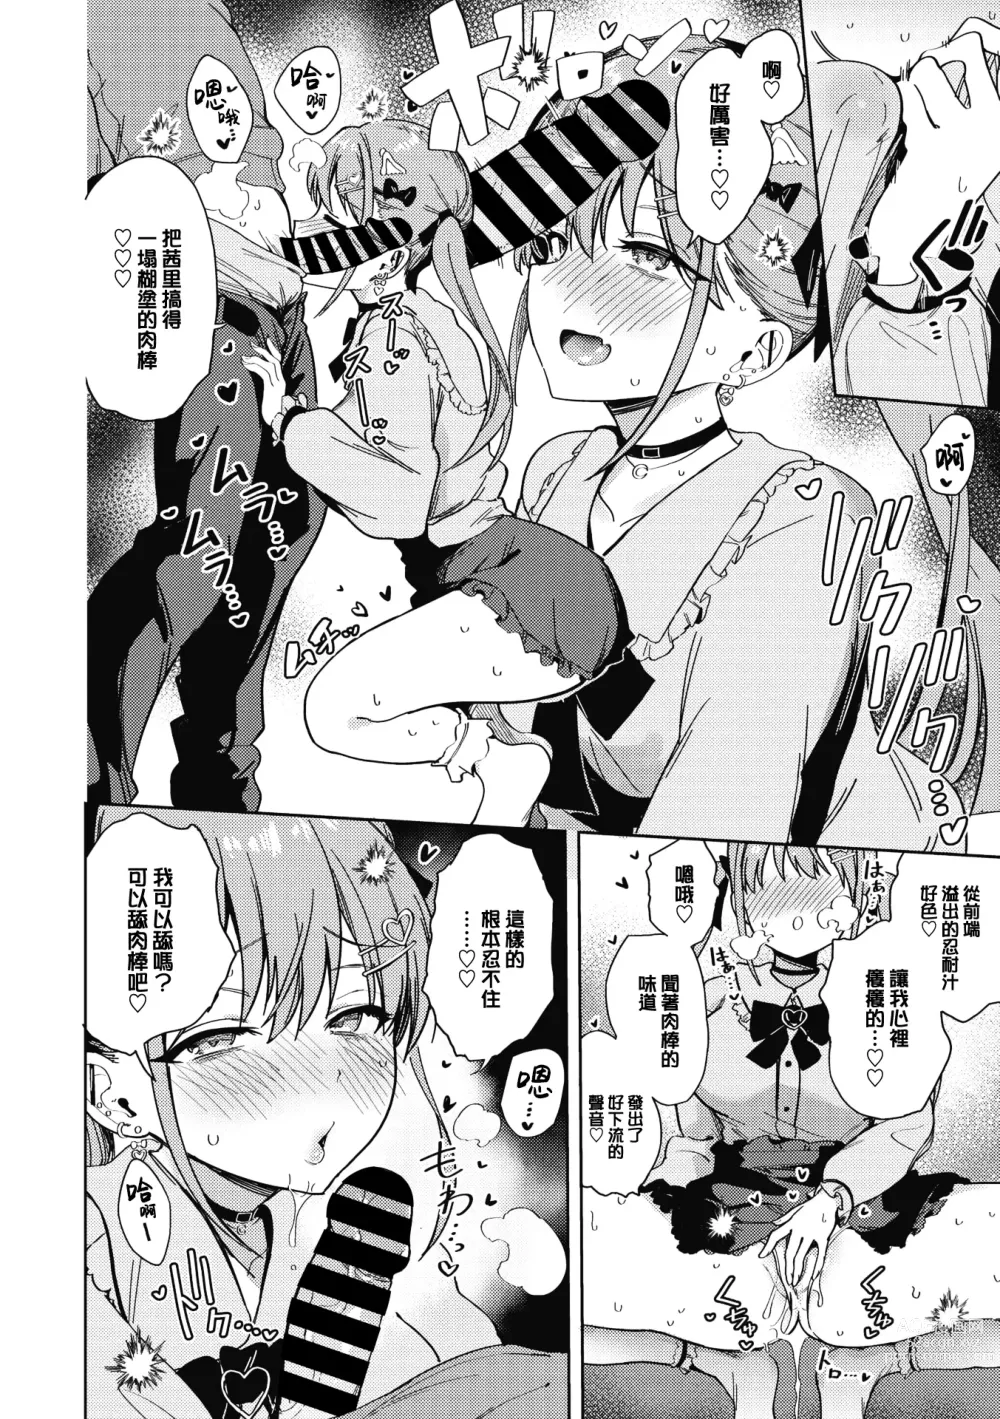 Page 15 of manga Best Match Mine Girl